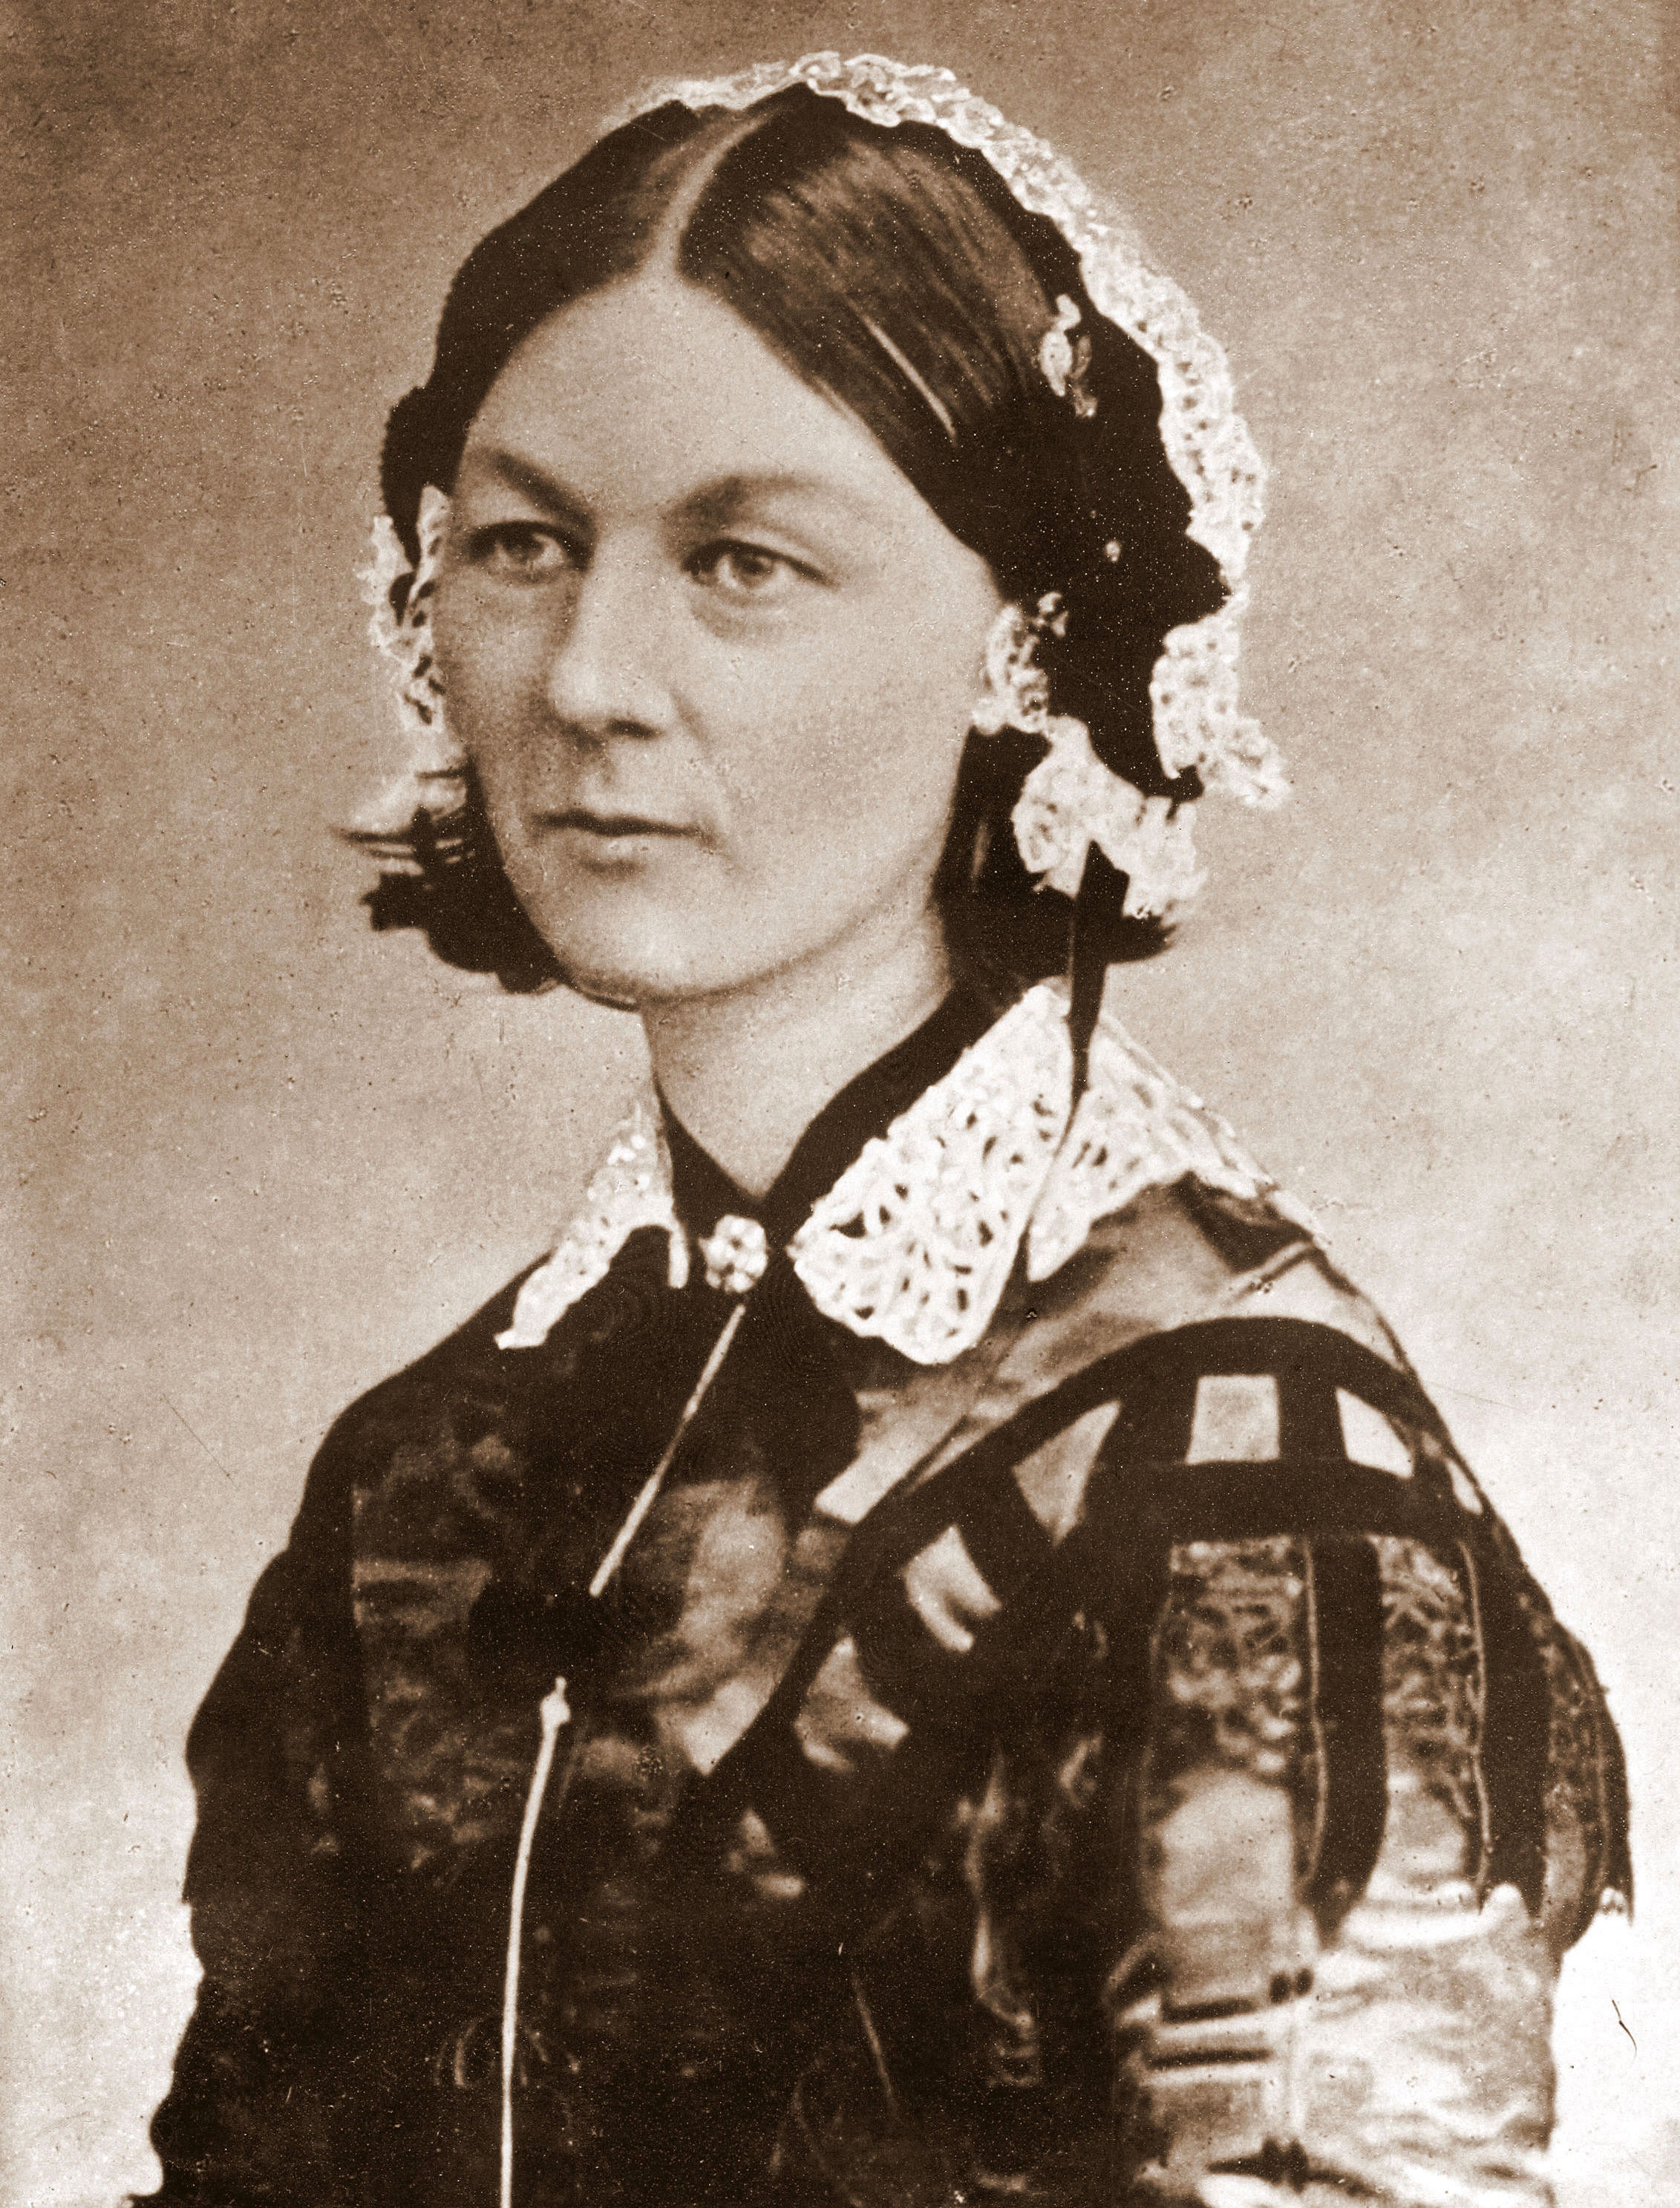 Ms. Florence Nightingale